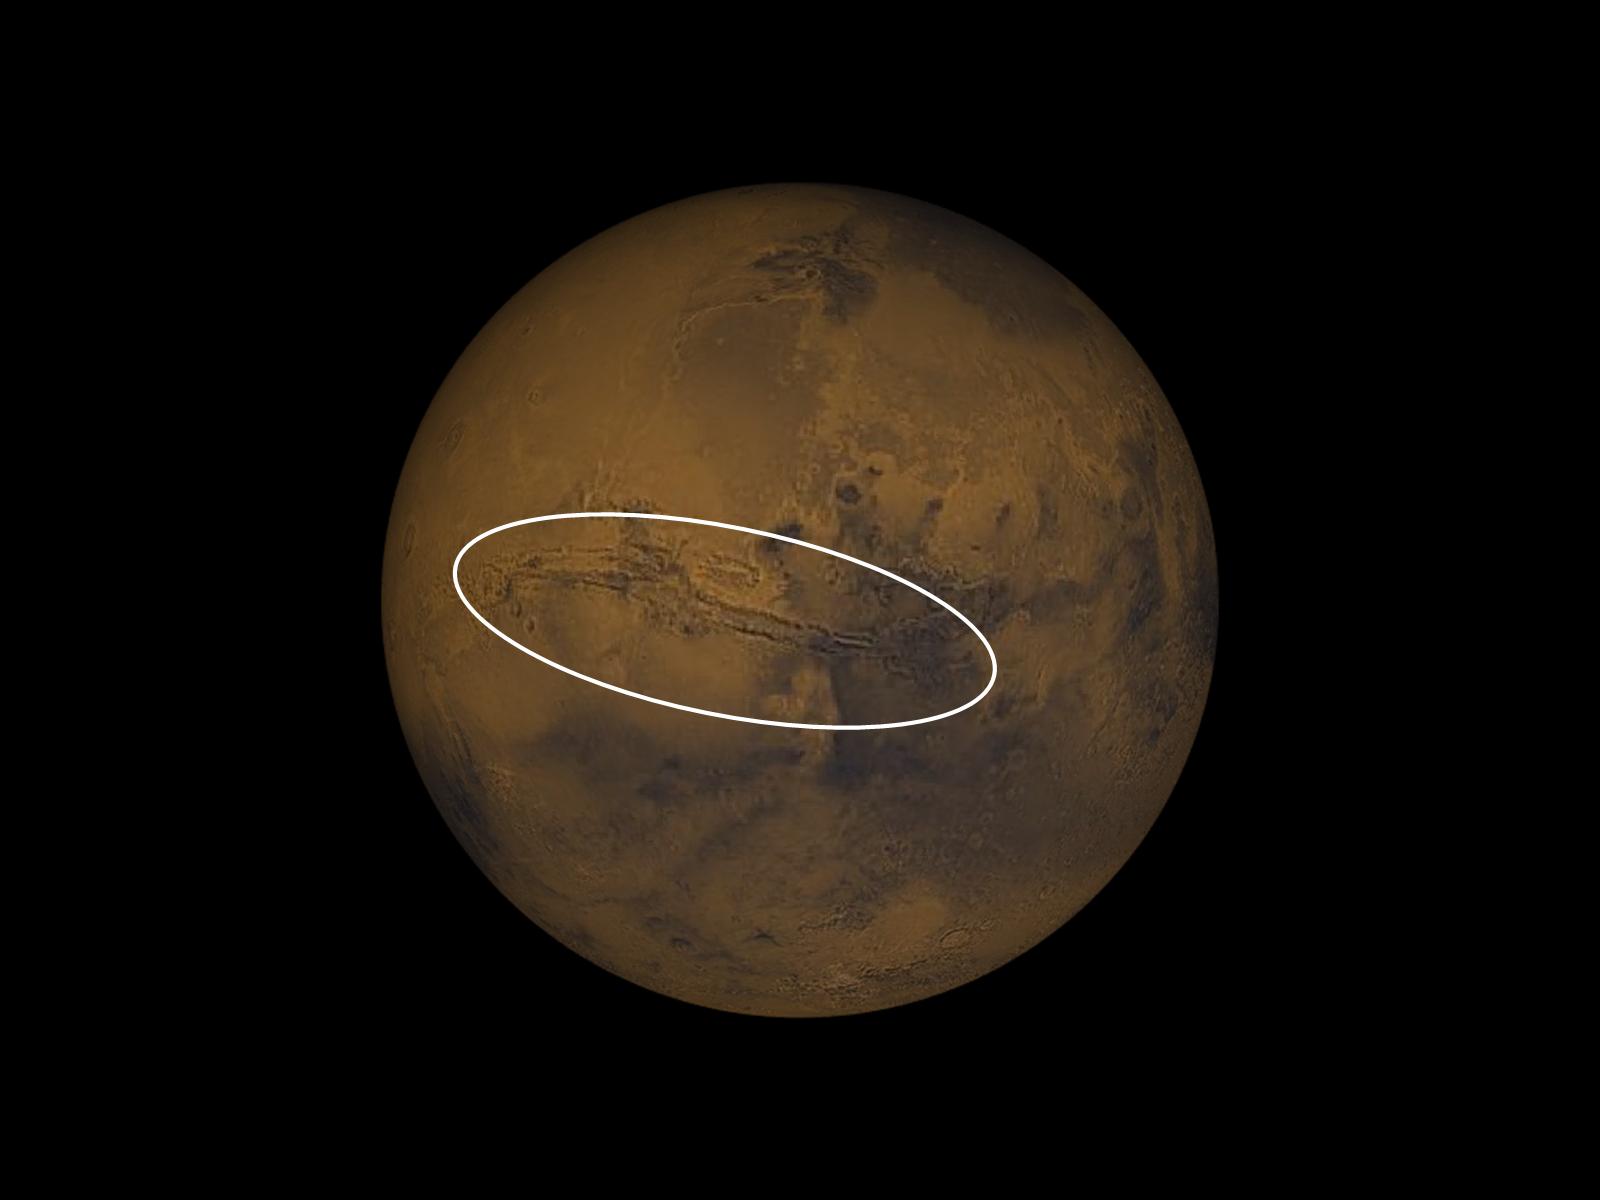 http://cronodon.com/images/Valles_Marineris.jpg